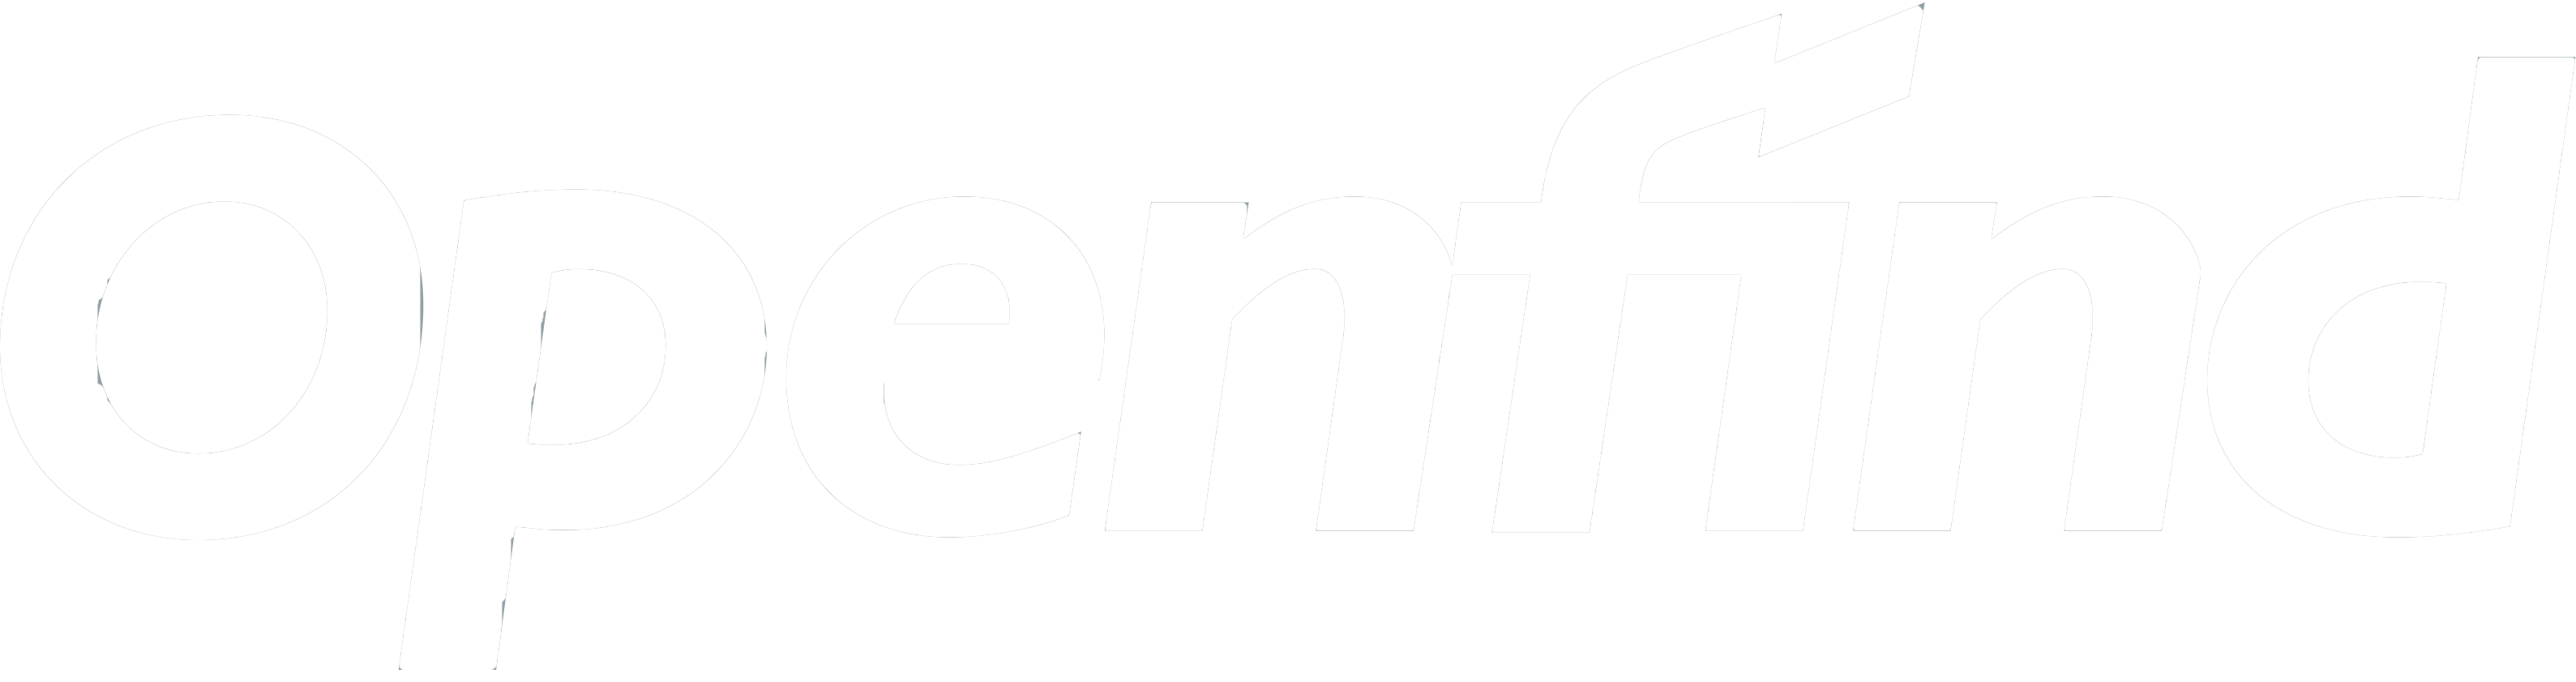 Openfind_logo_white(beta)